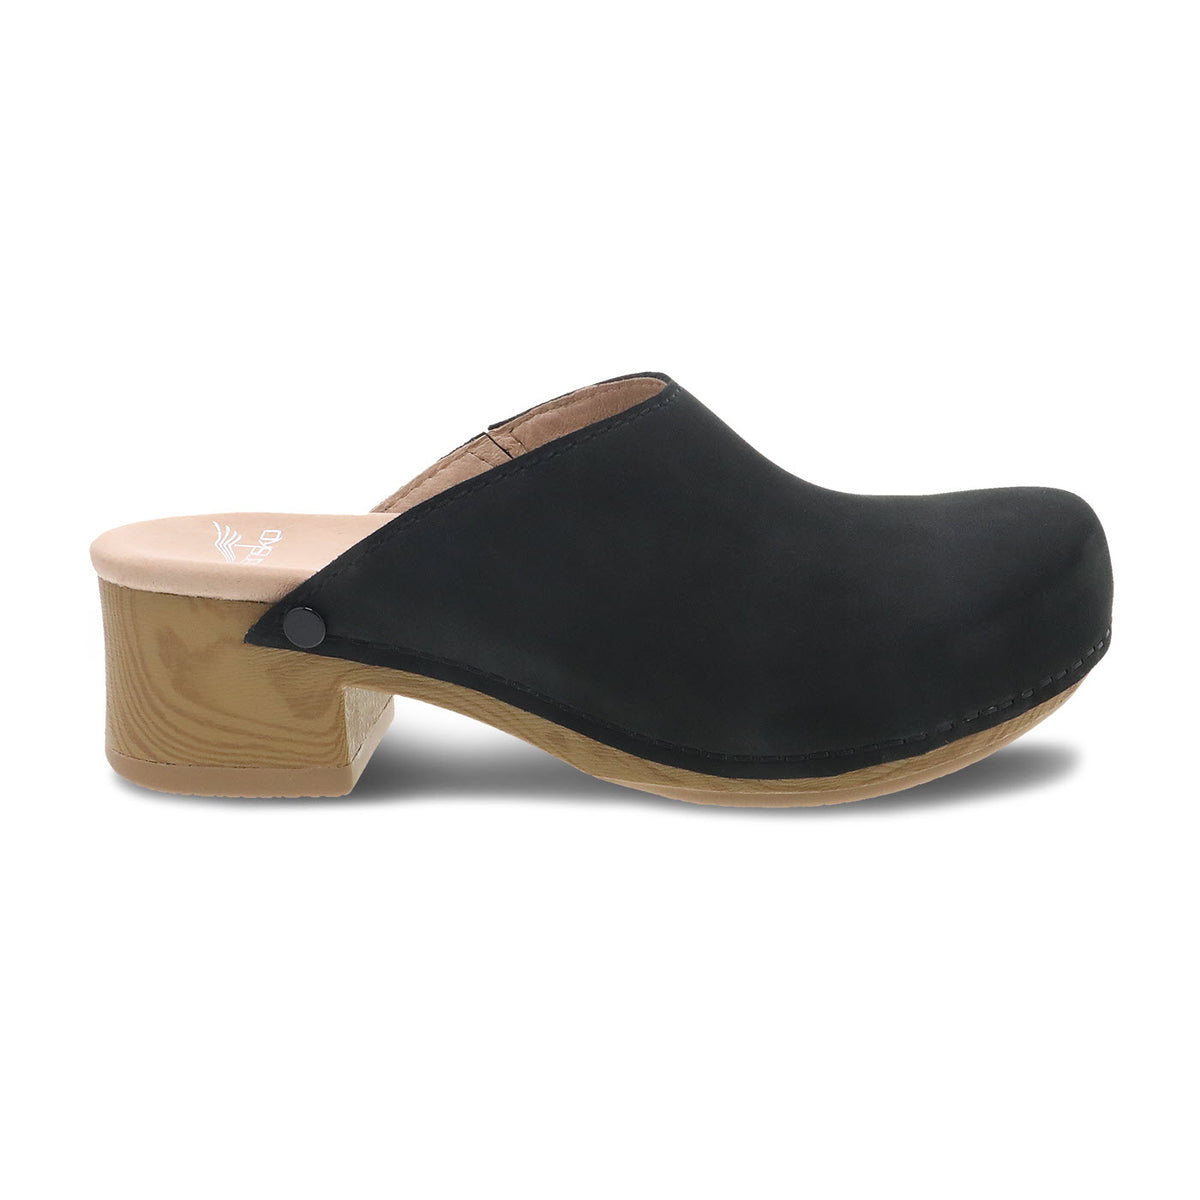 Dansko Giulia black milled nubuck clog with lightweight polypropylene midsole and wooden heel on a white background.